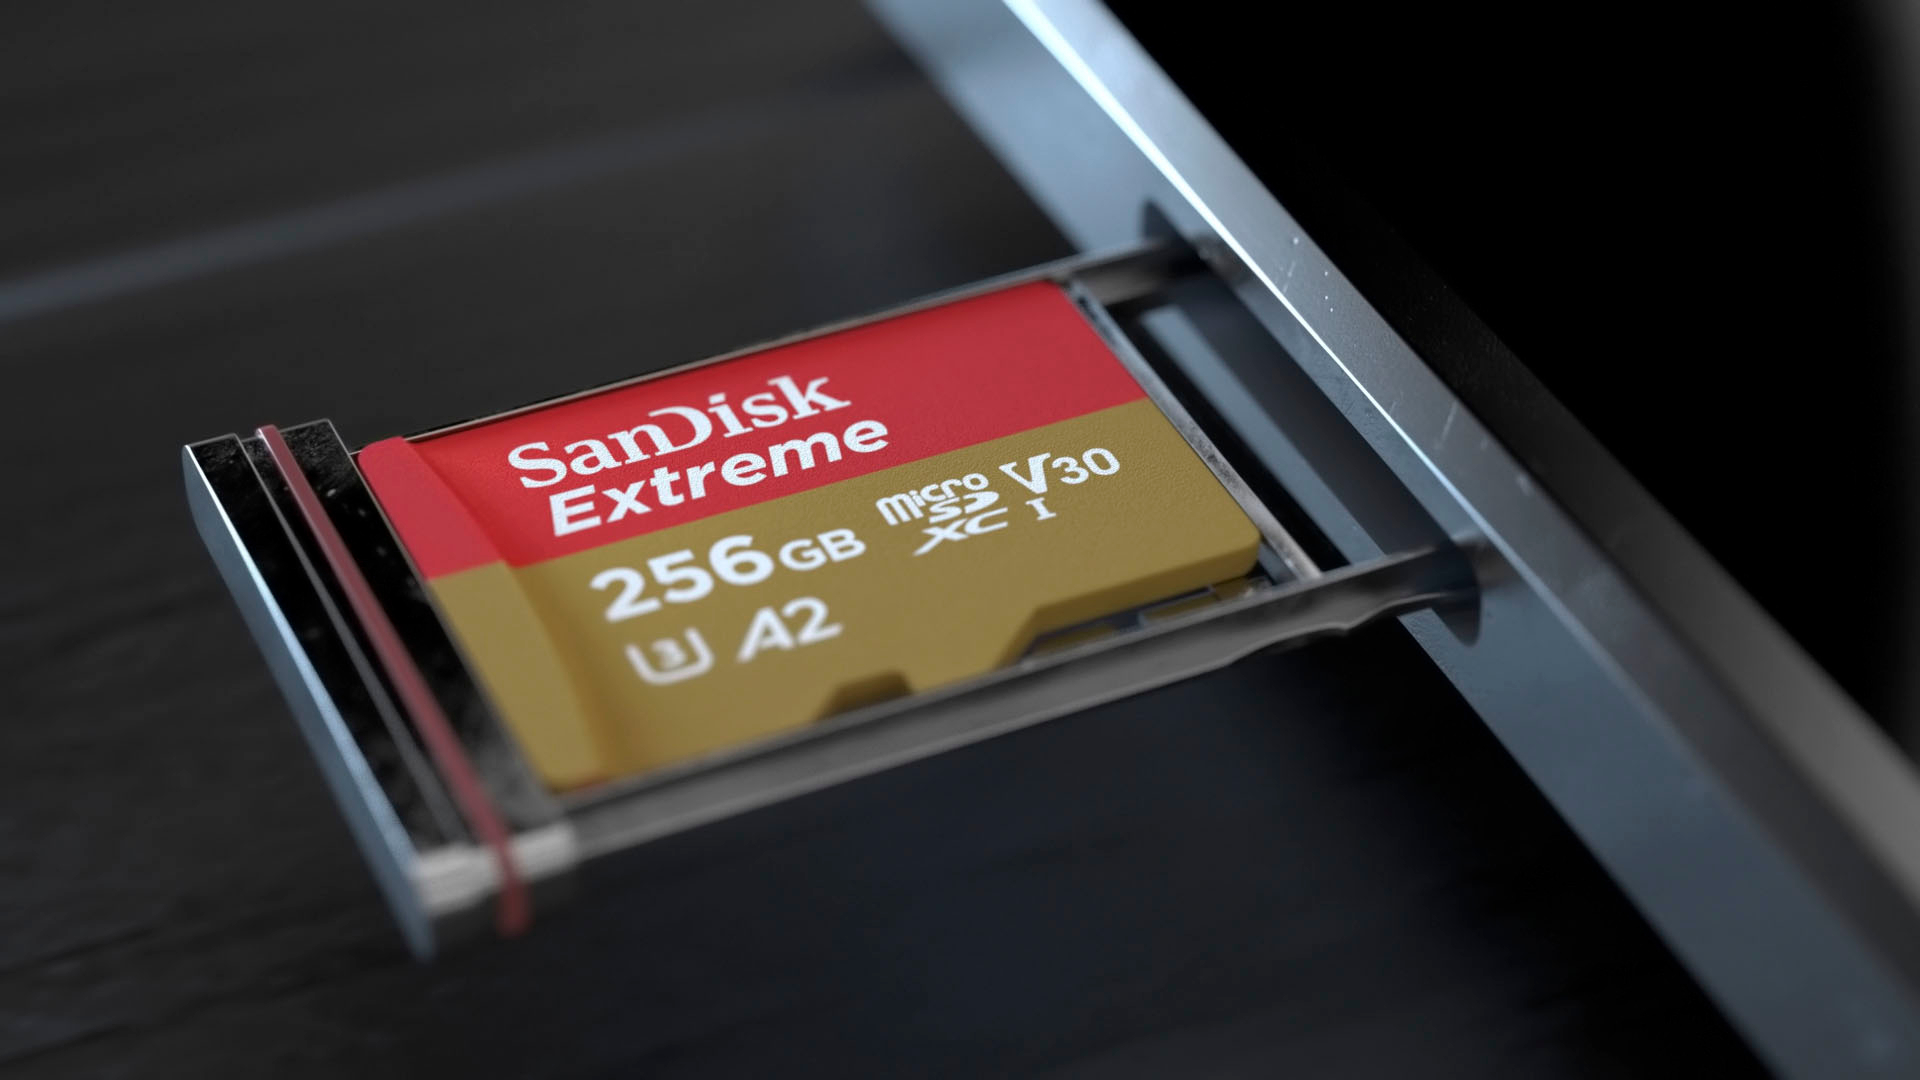 SanDisk Extreme® 256GB MicroSDXC™ - Memory Card for Cameras